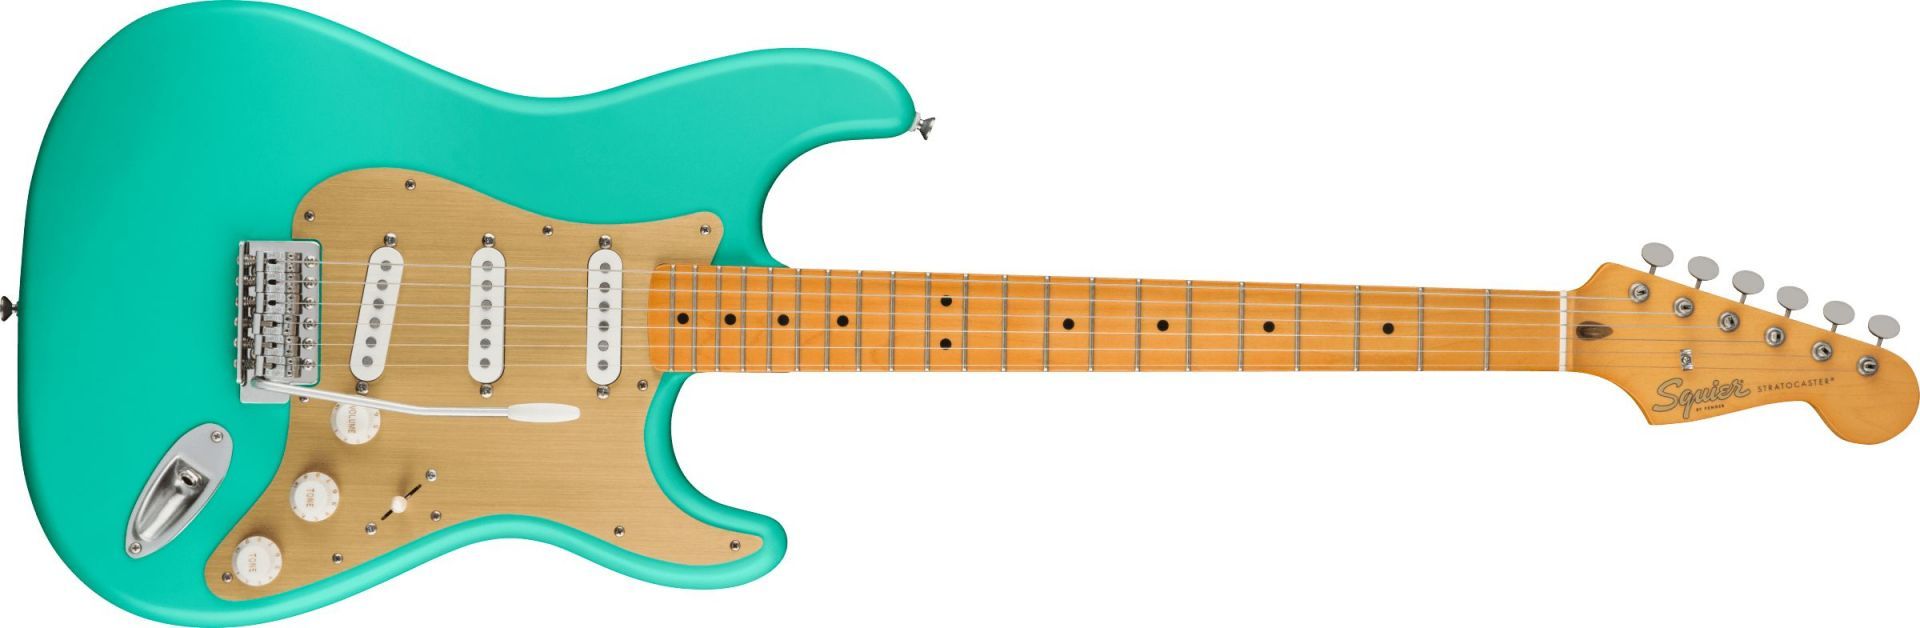 Squier 40th Anniversary Stratocaster Vintage Edition MN SeaFoam Green